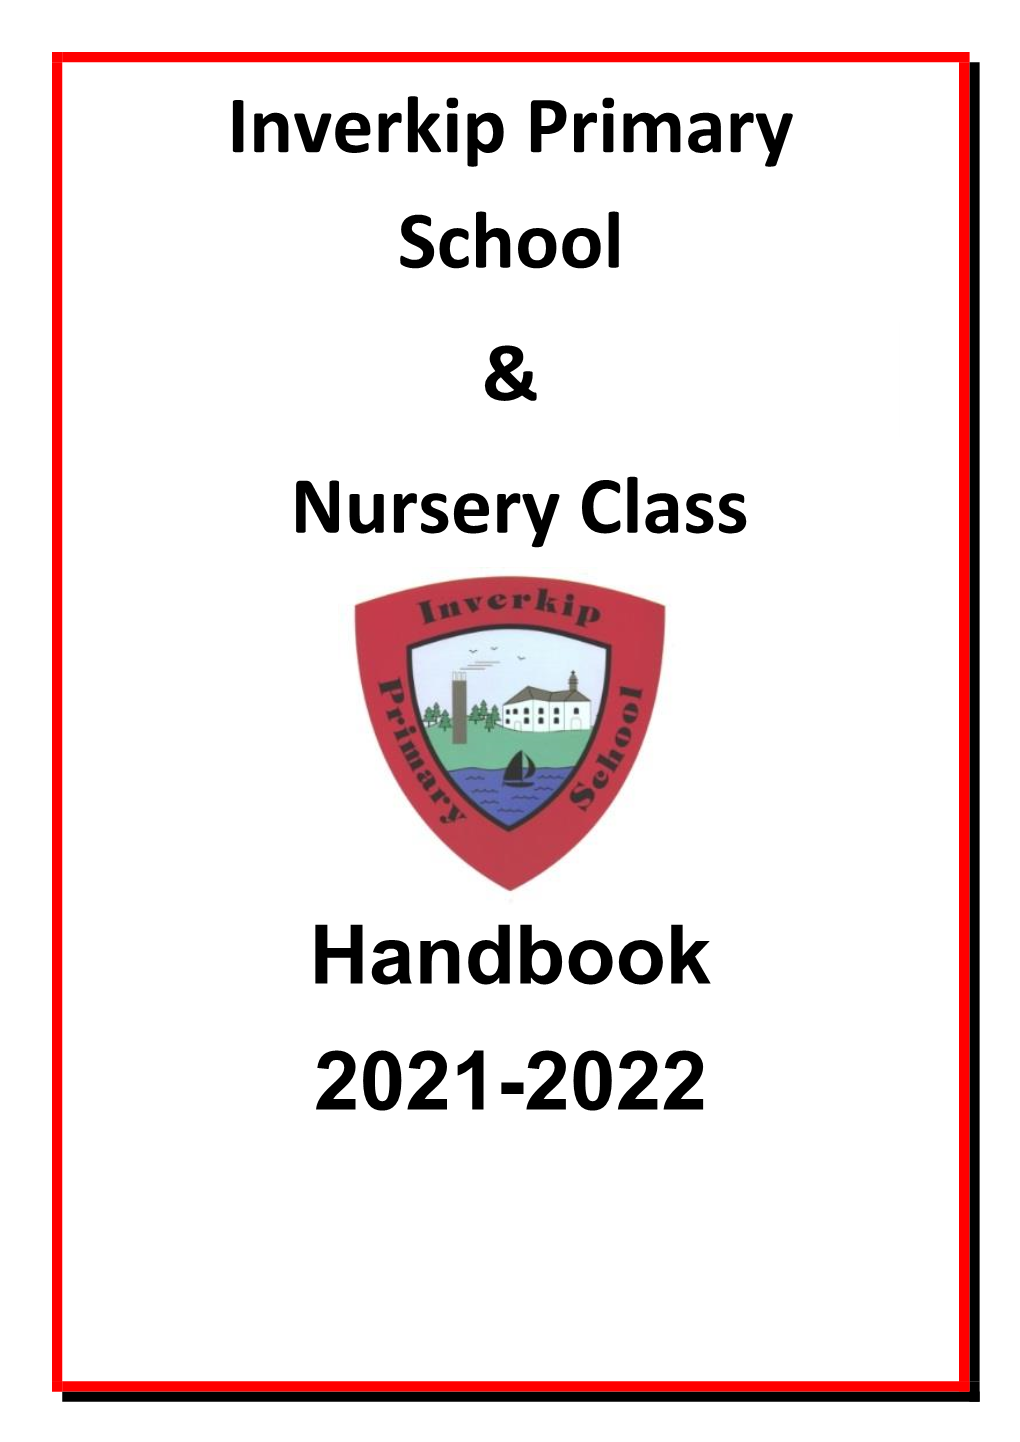 Inverkip Primary School & Nursery Class Handbook 2021-2022